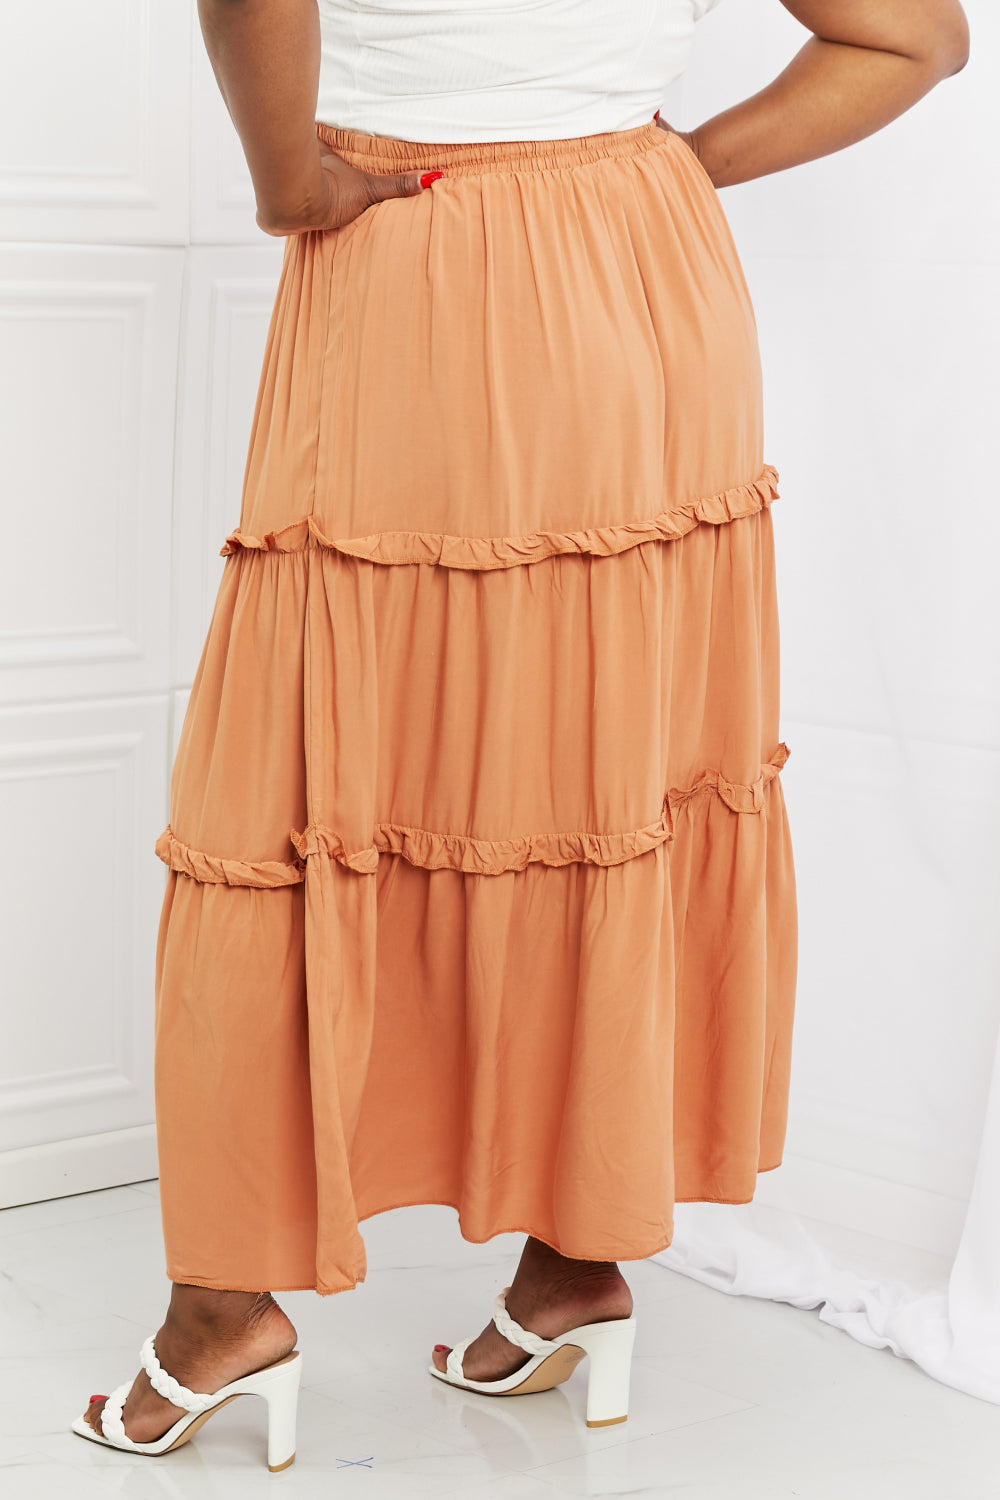 Summer Days Ruffled Maxi Skirt in Butter Orange